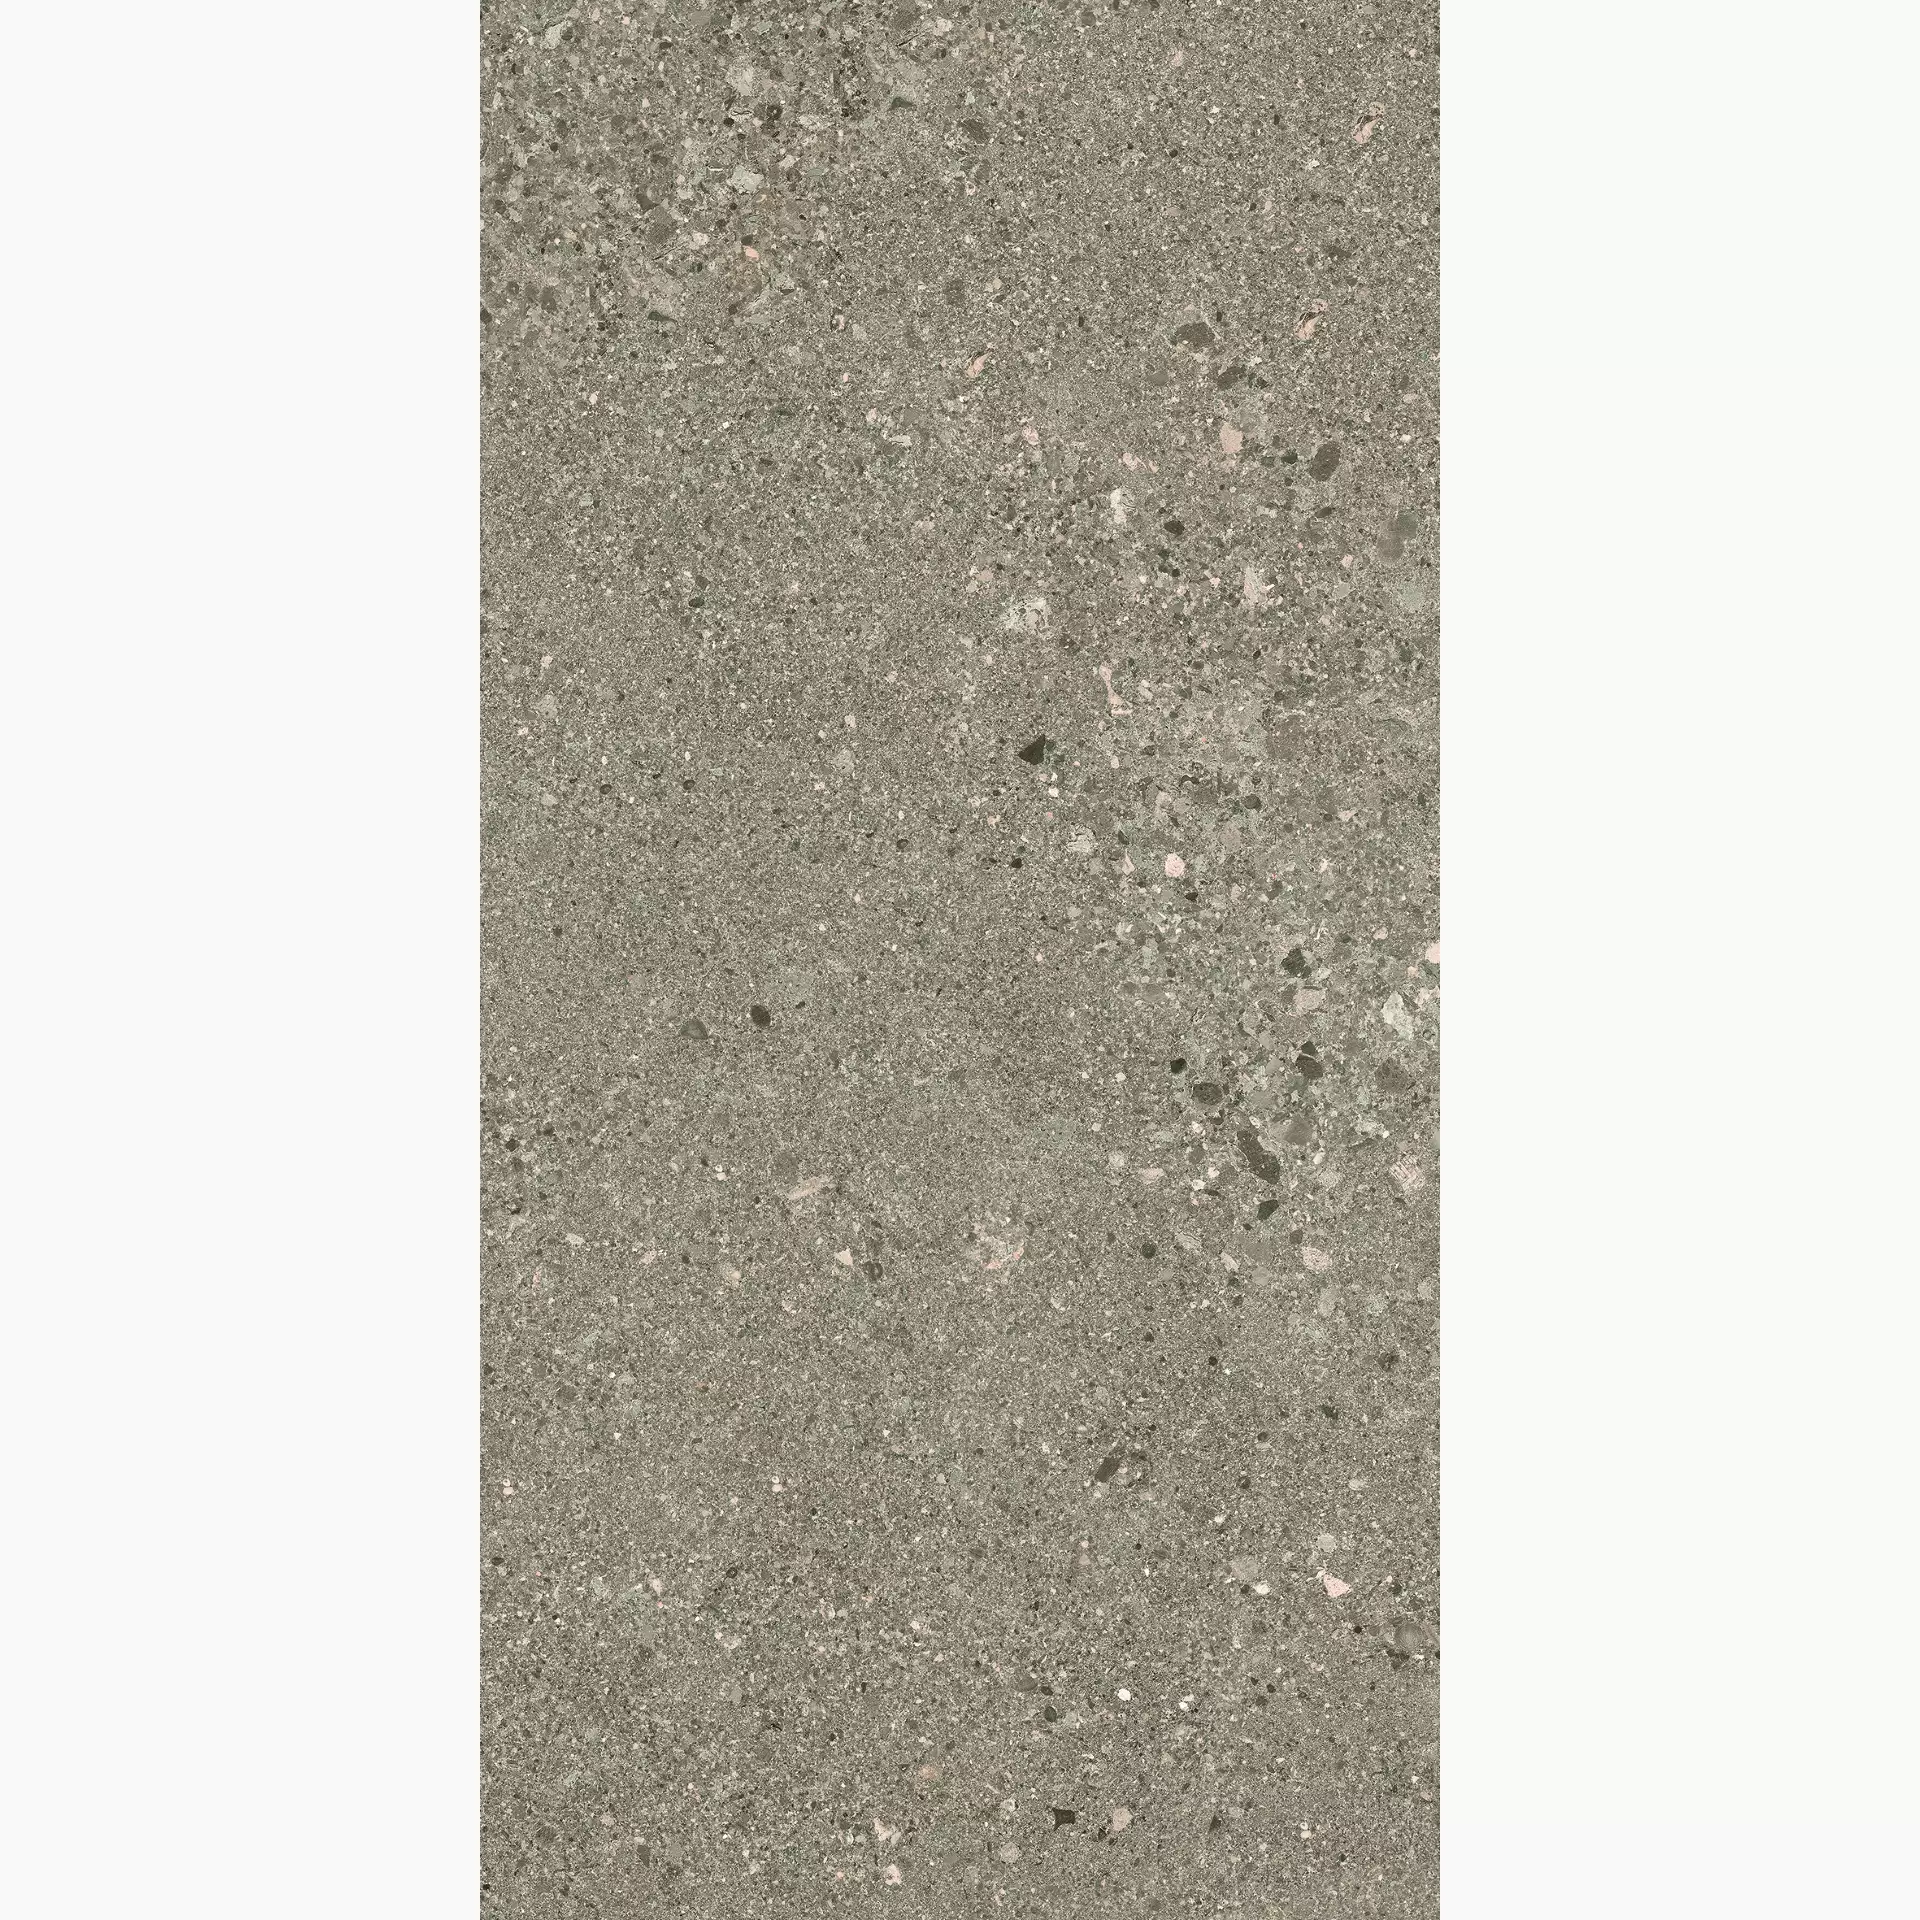 Ergon Grain Stone Rough Grain Taupe Naturale E0CN 30x60cm rectified 9,5mm